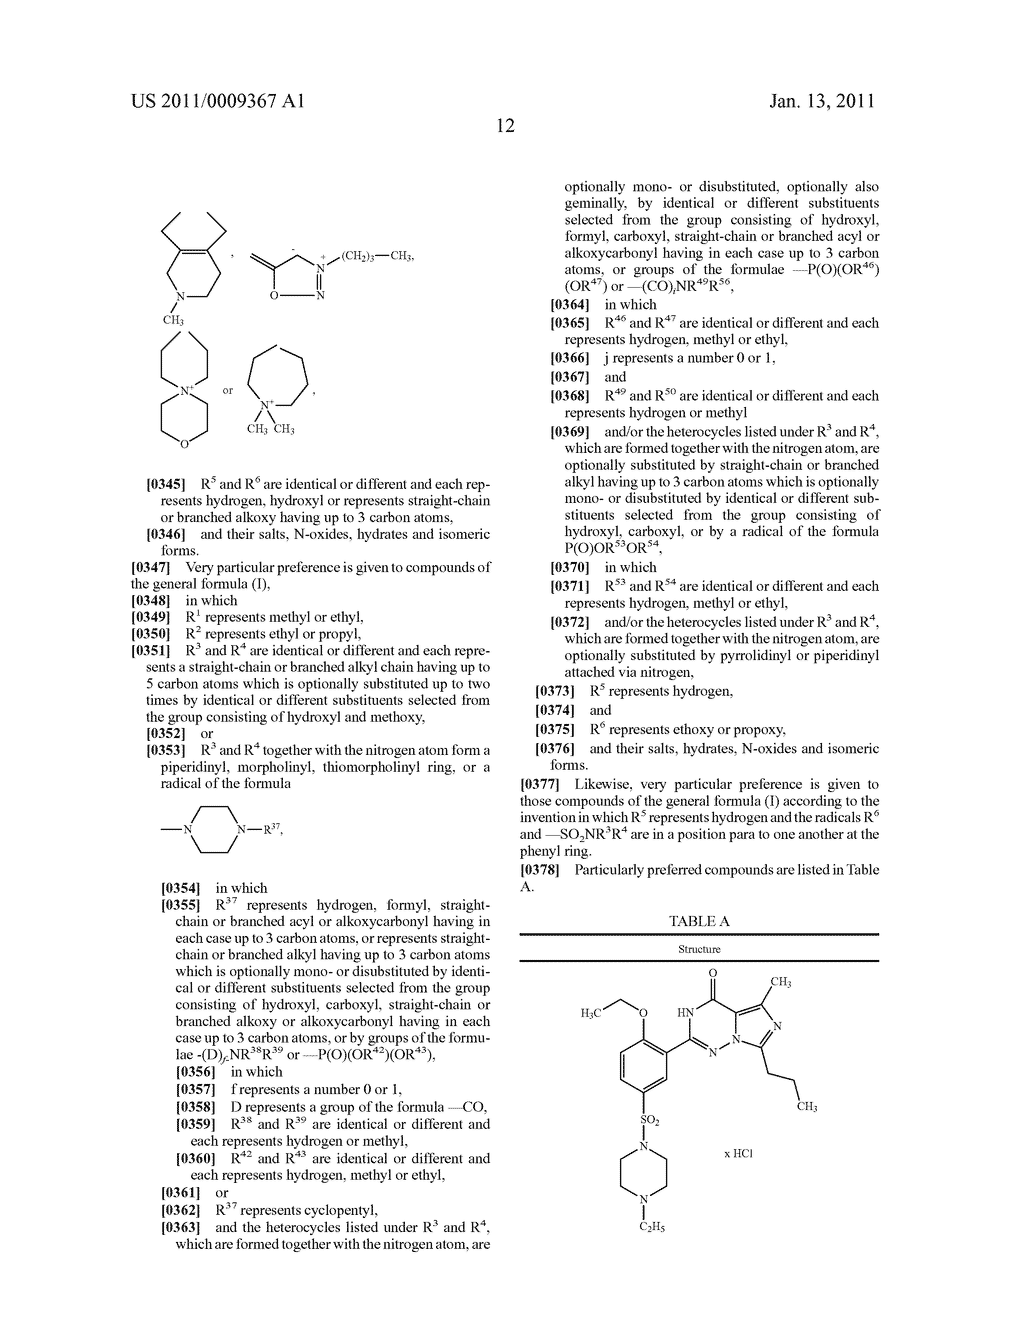 2-PHENYL SUBSTITUTED IMIDAZOTRIAZINONES AS PHOSPHODIESTERASE INHIBITORS - diagram, schematic, and image 13